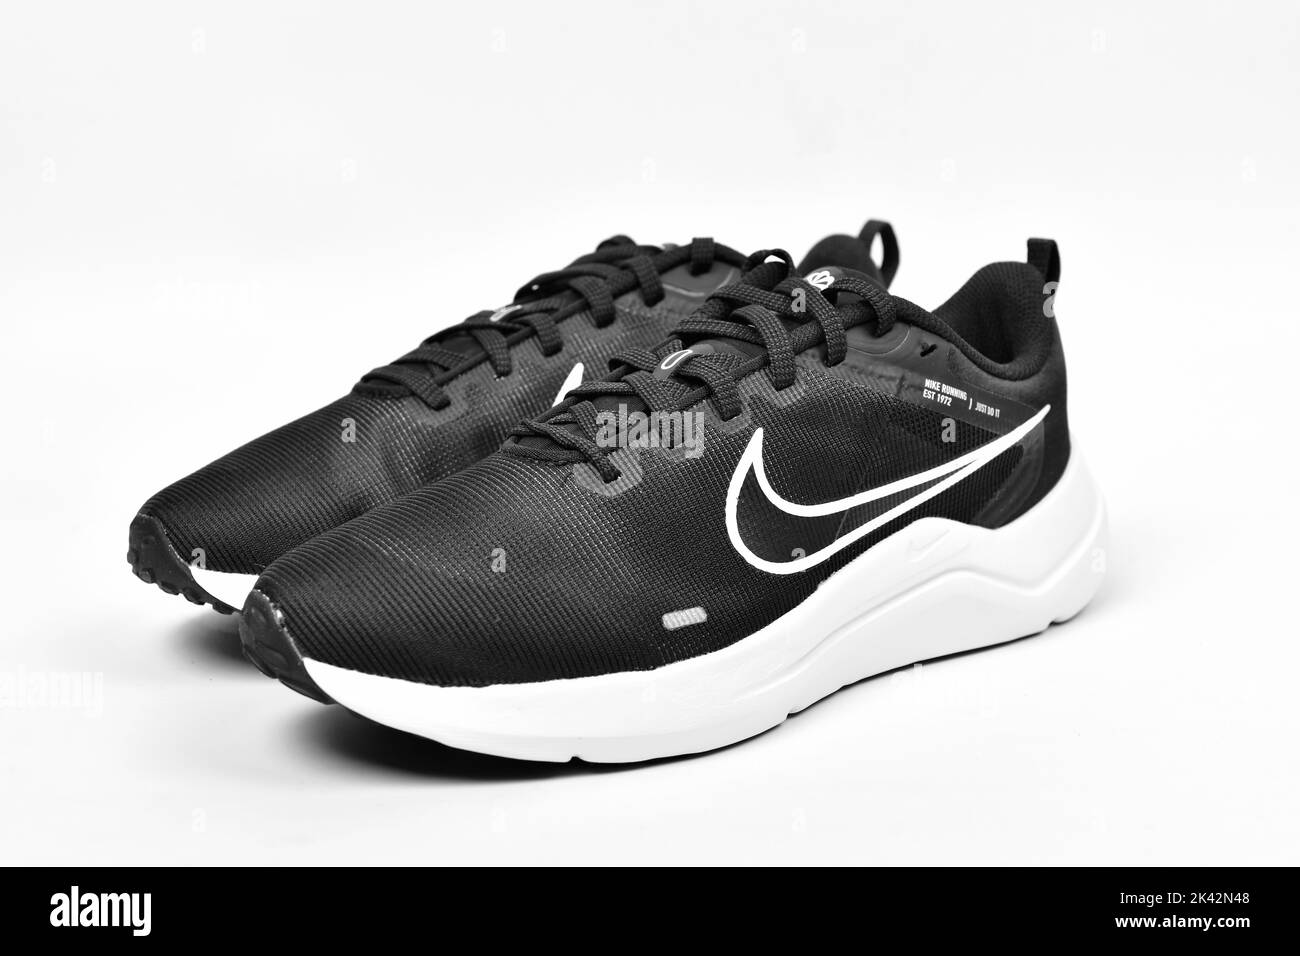 New Delhi, India - 29 September 2022 : Pair of Nike Running Shoes Isolated on White Background Stock Photo